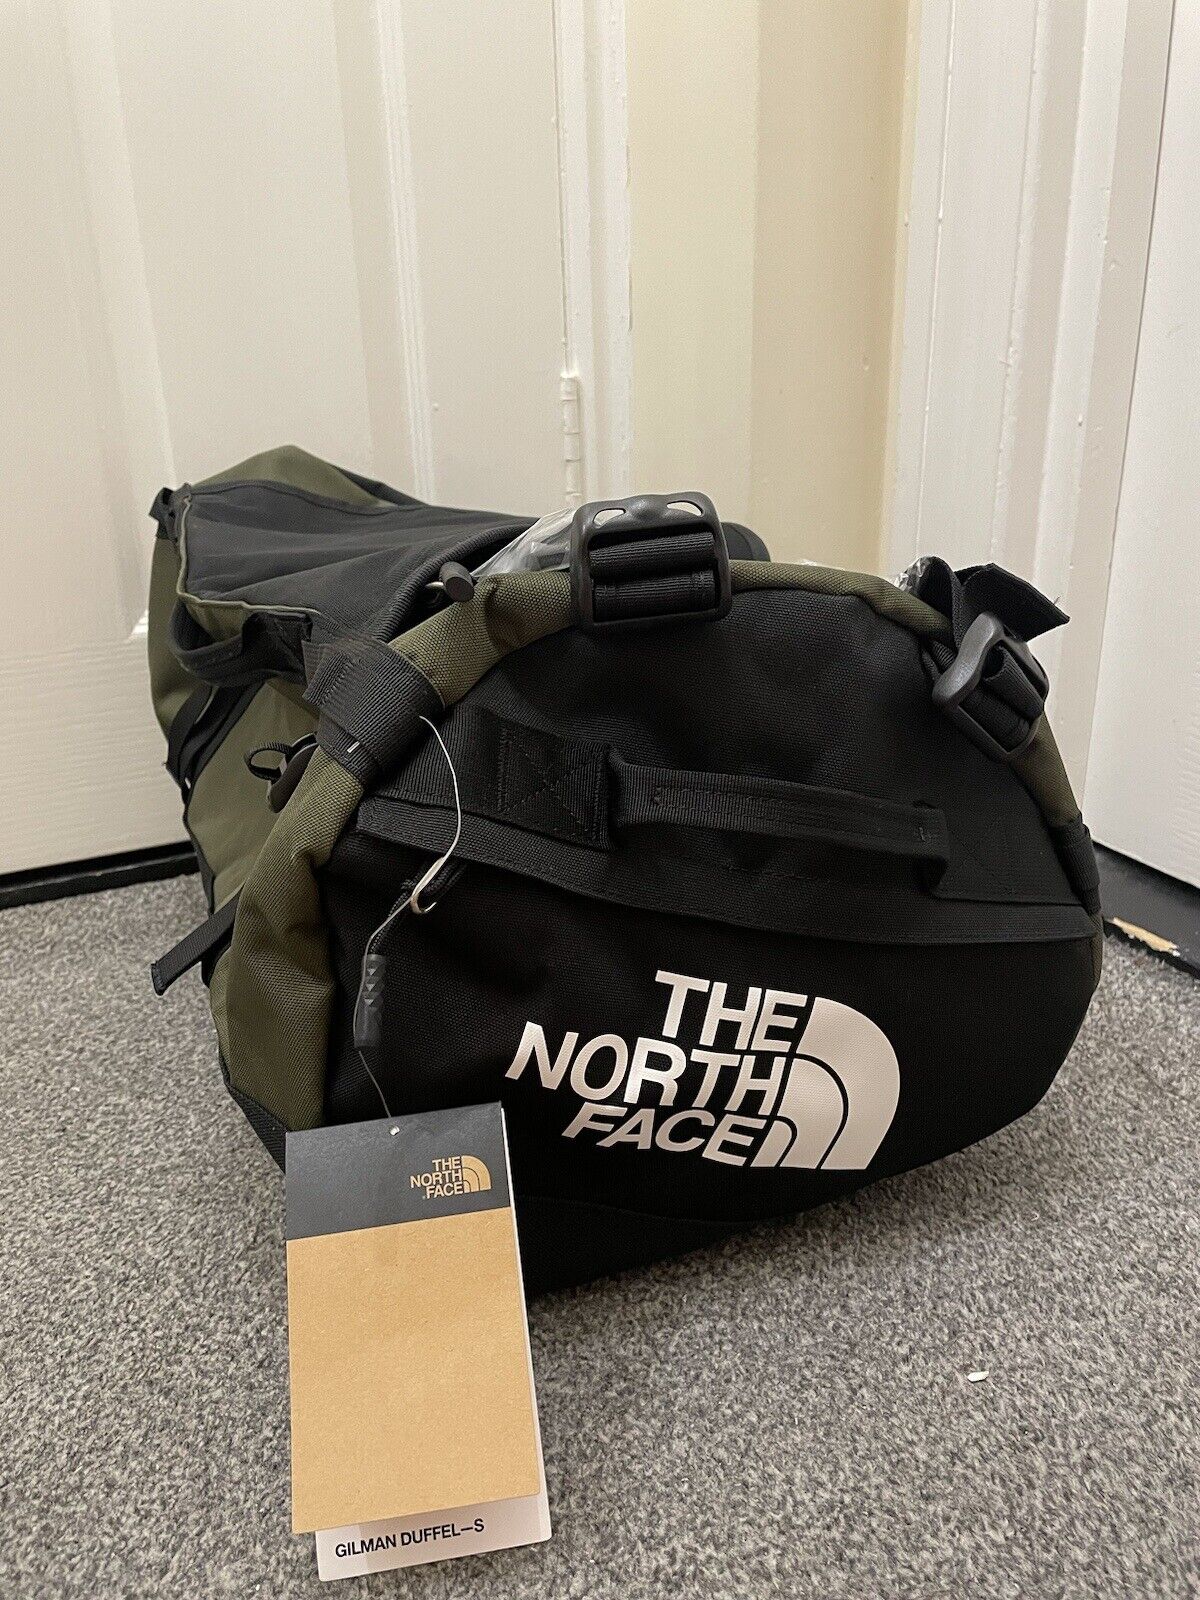 The North Face Duffel Bag - SMALL | eBay